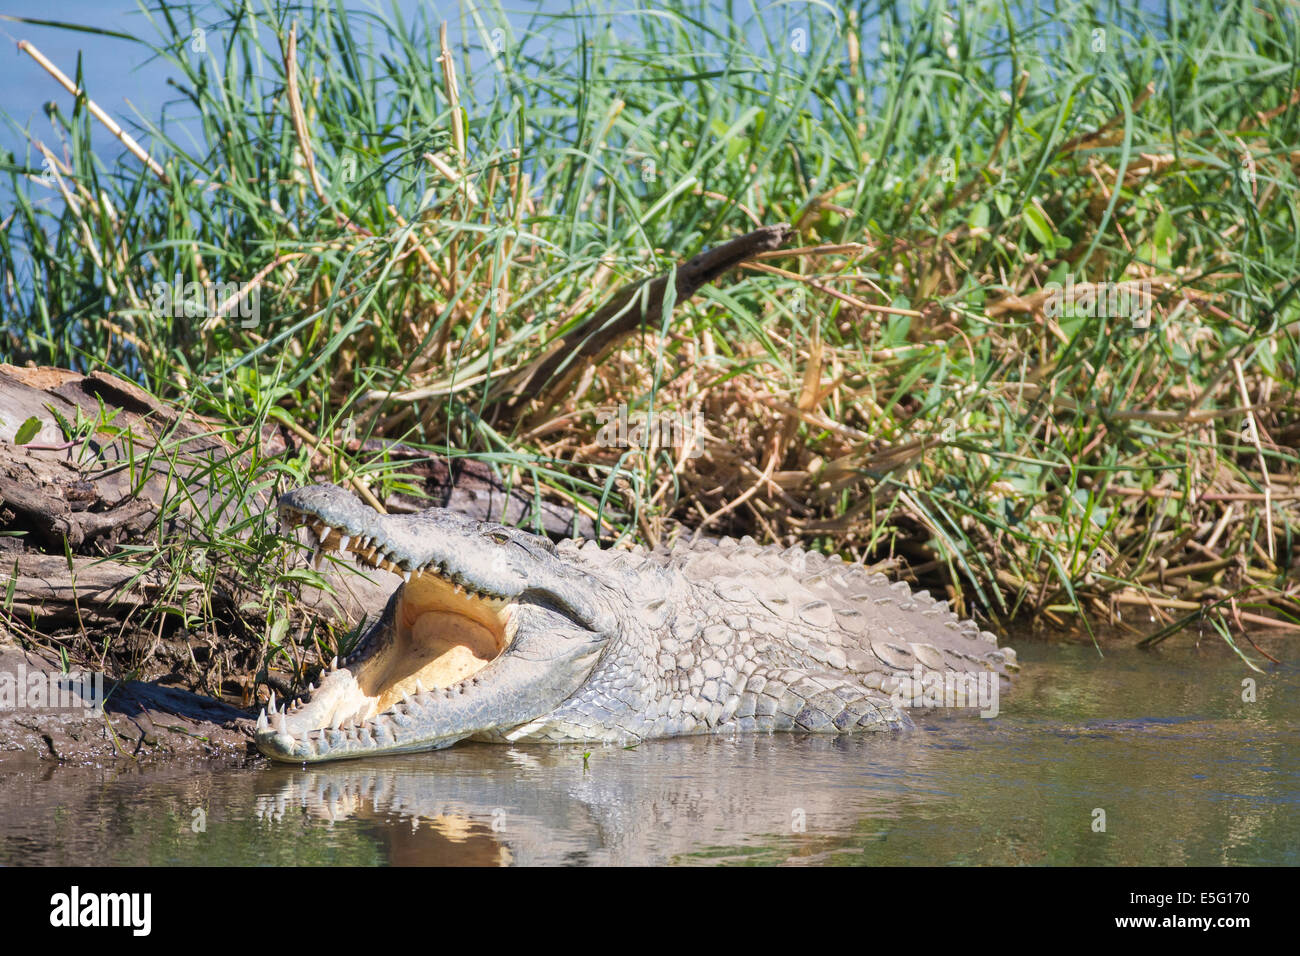 Nile Crocodile basking with mouth open Stock Photo